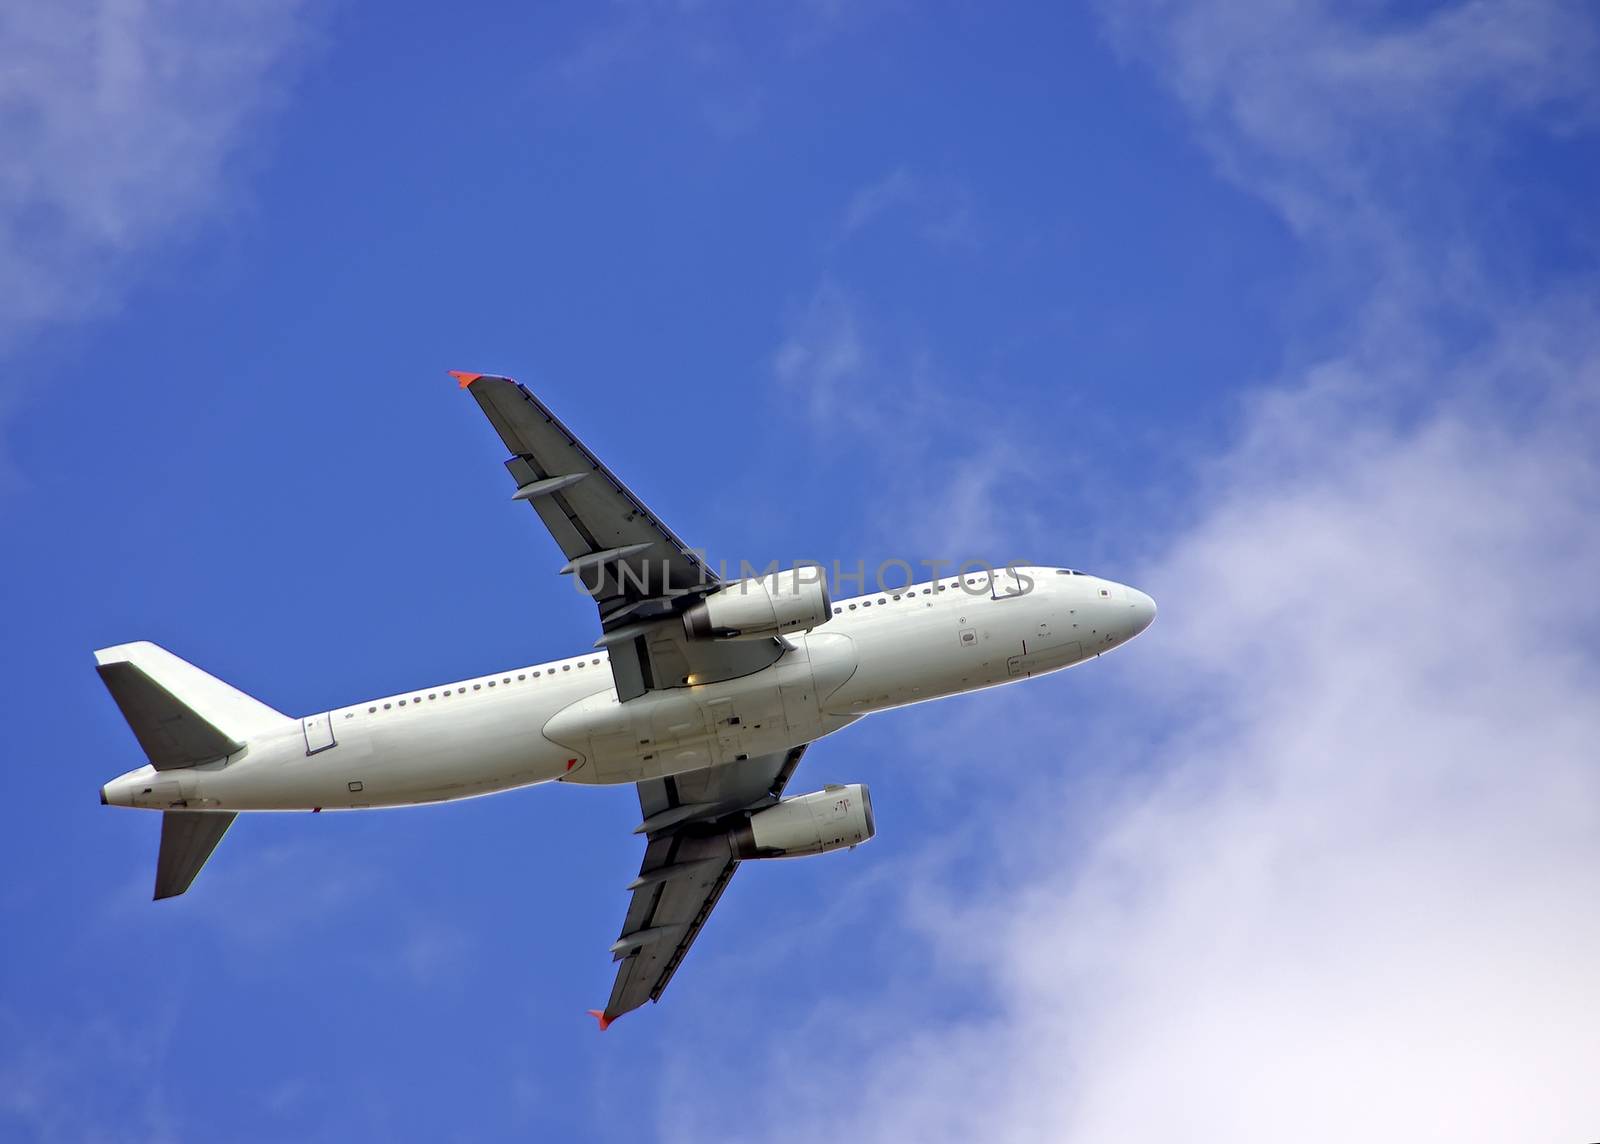 Passenger Aircraft taking off from Majorca